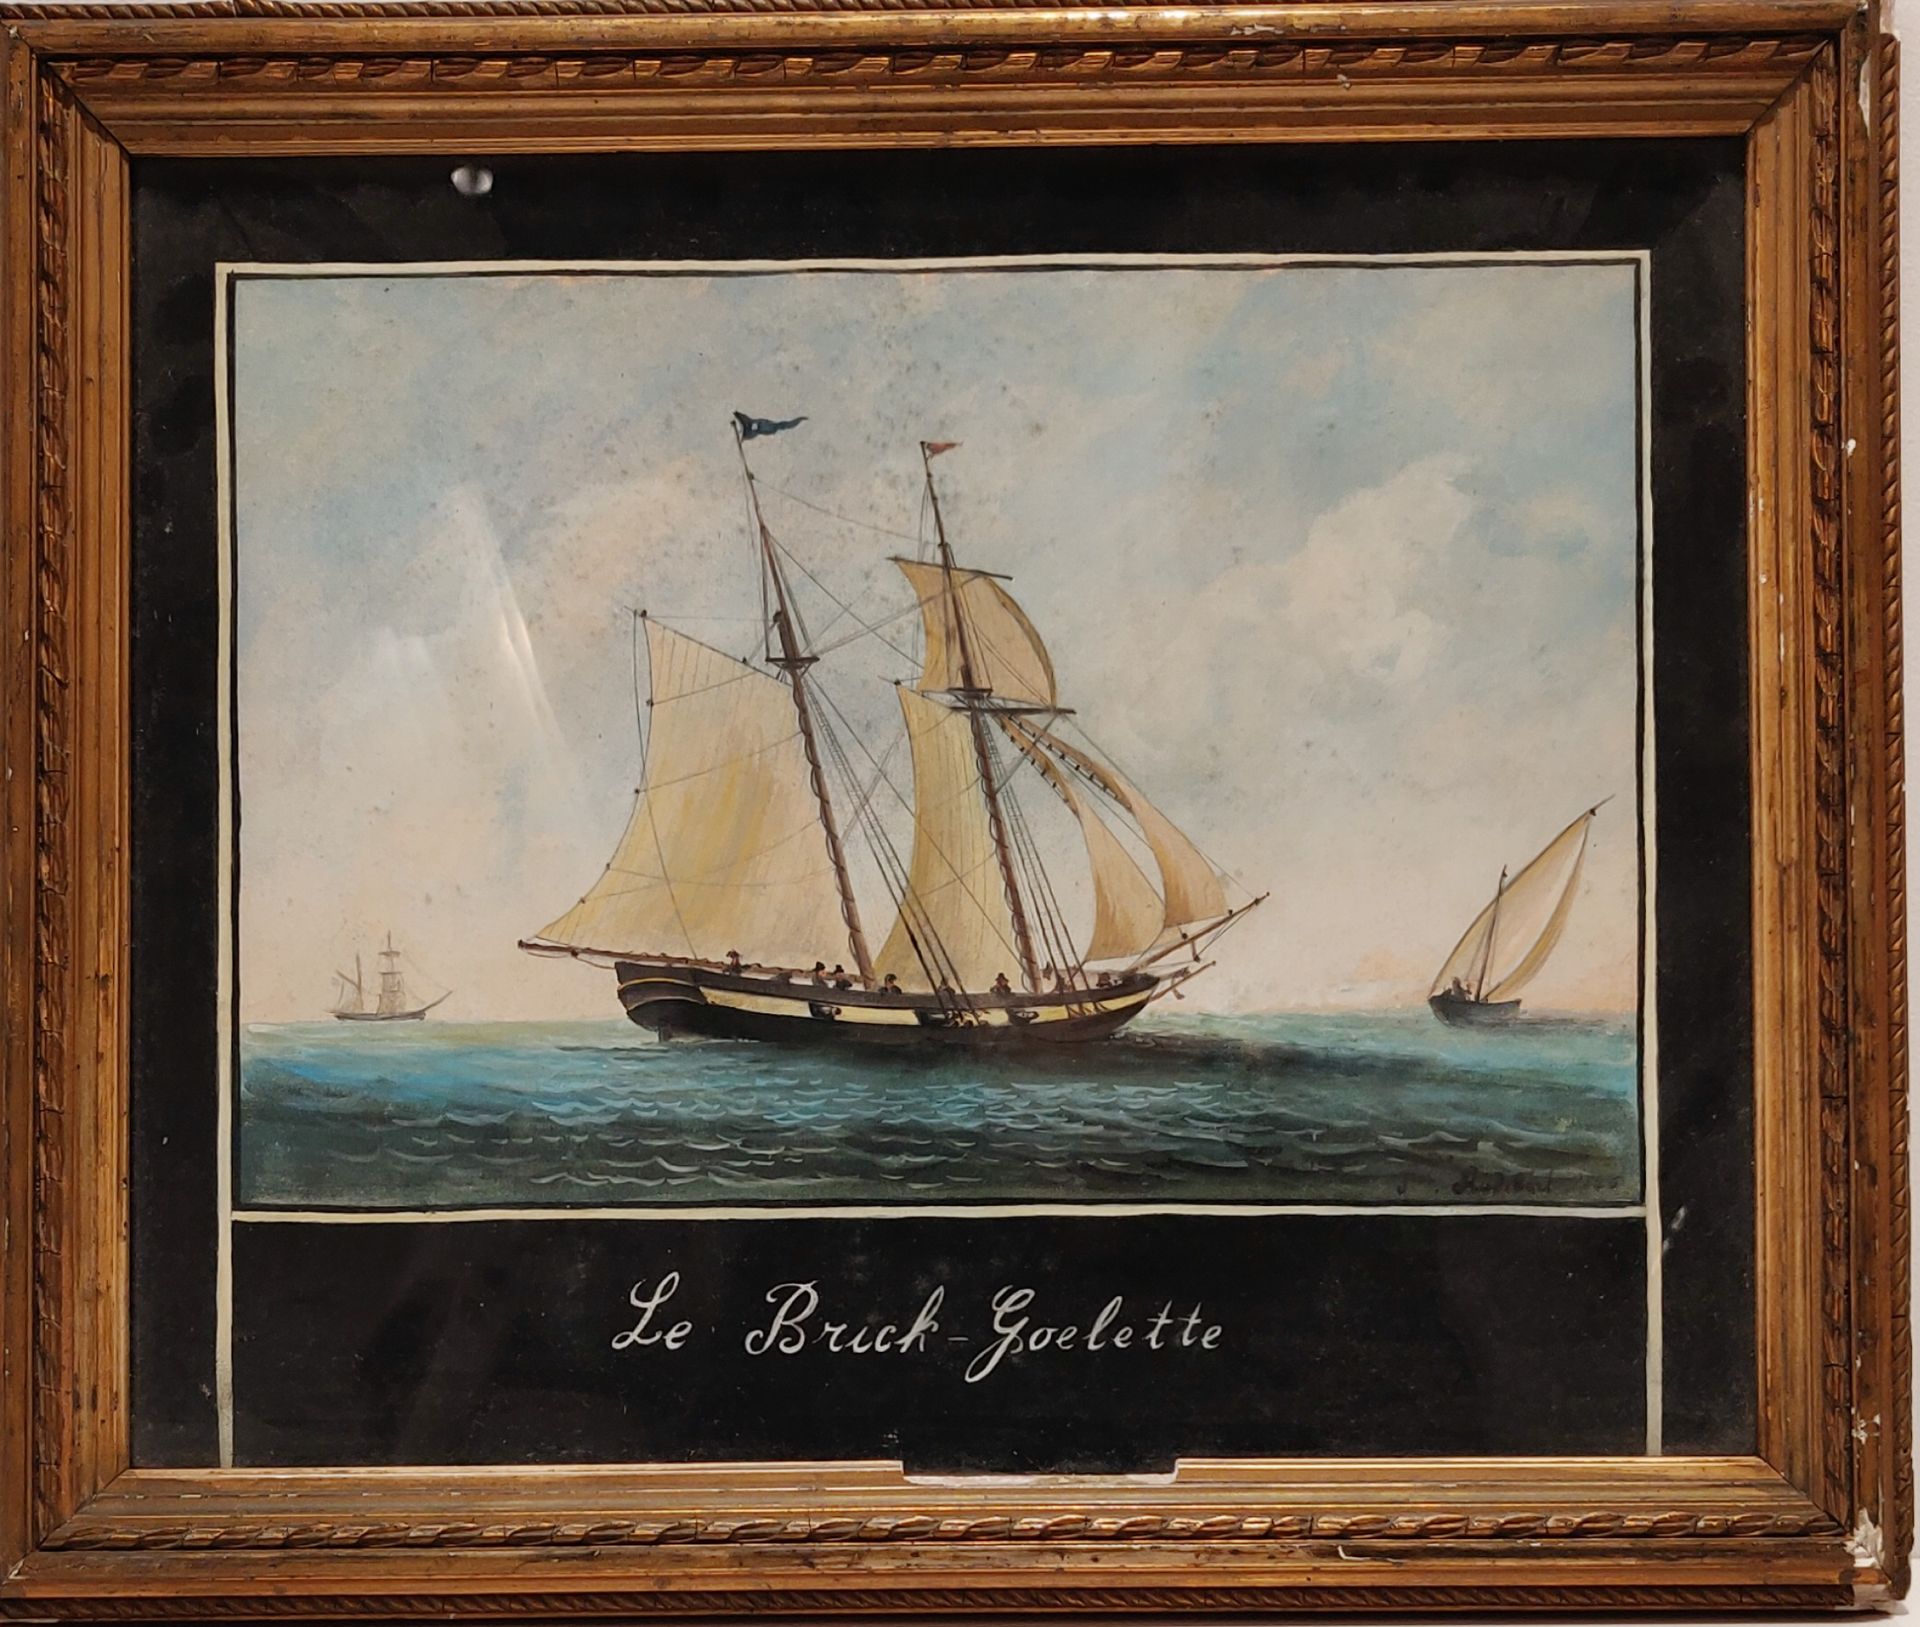 Null 琥珀

砖头-戈耶特

水粉画

右下方有1845年的签名和日期

27 x 33 厘米